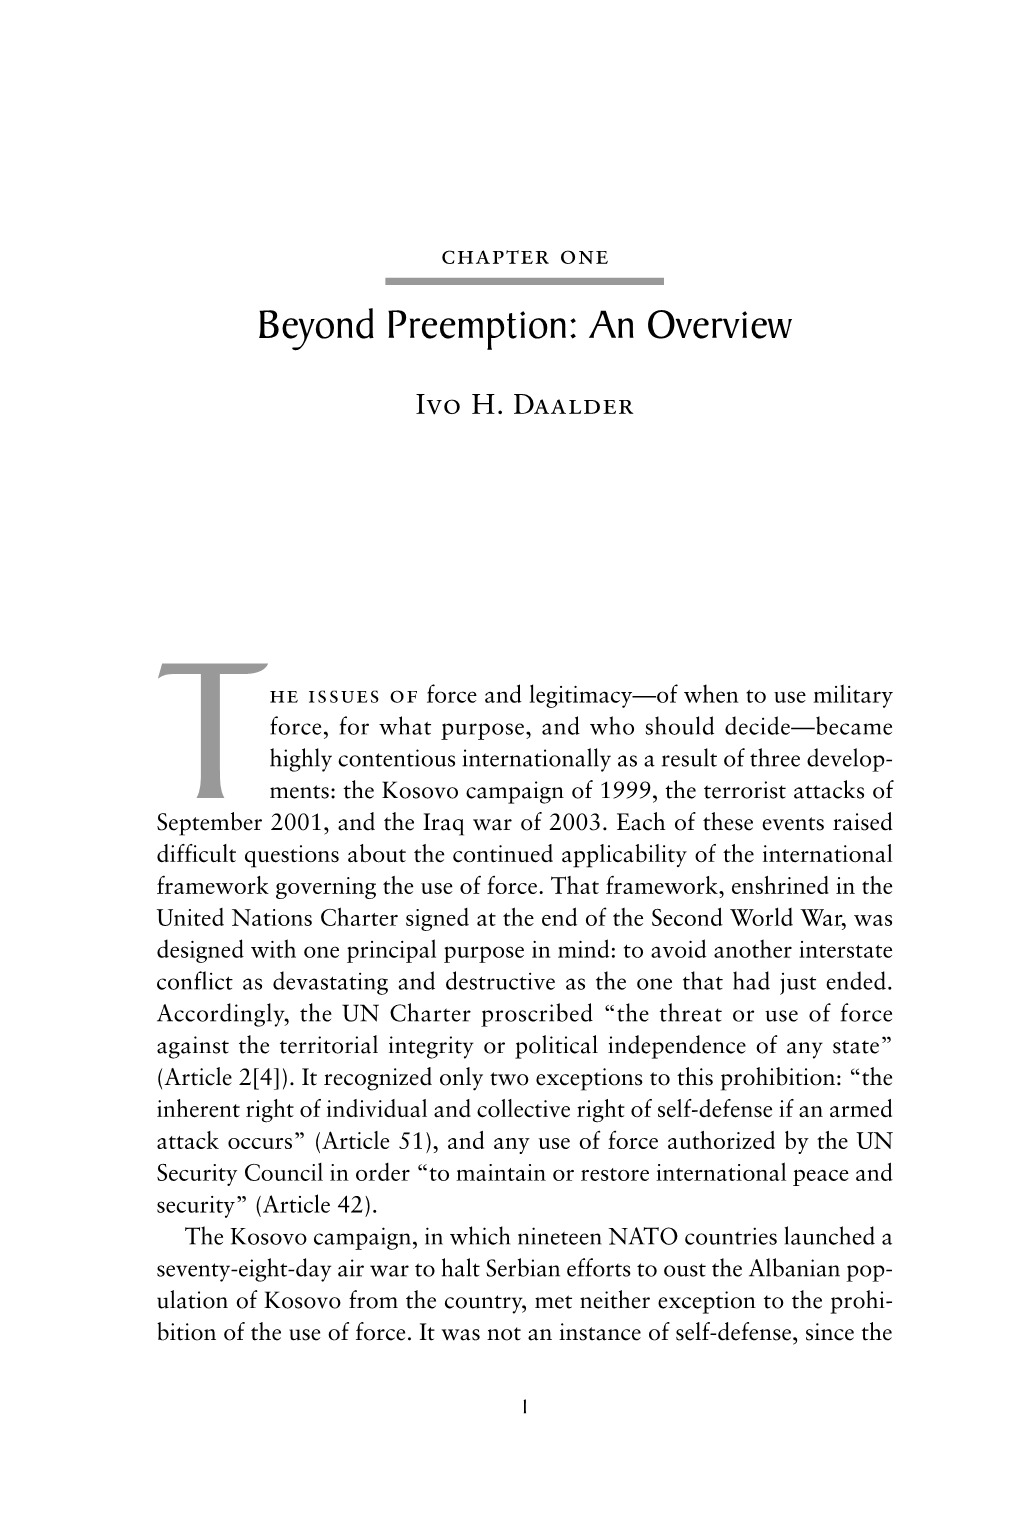 Beyond Preemption: an Overview